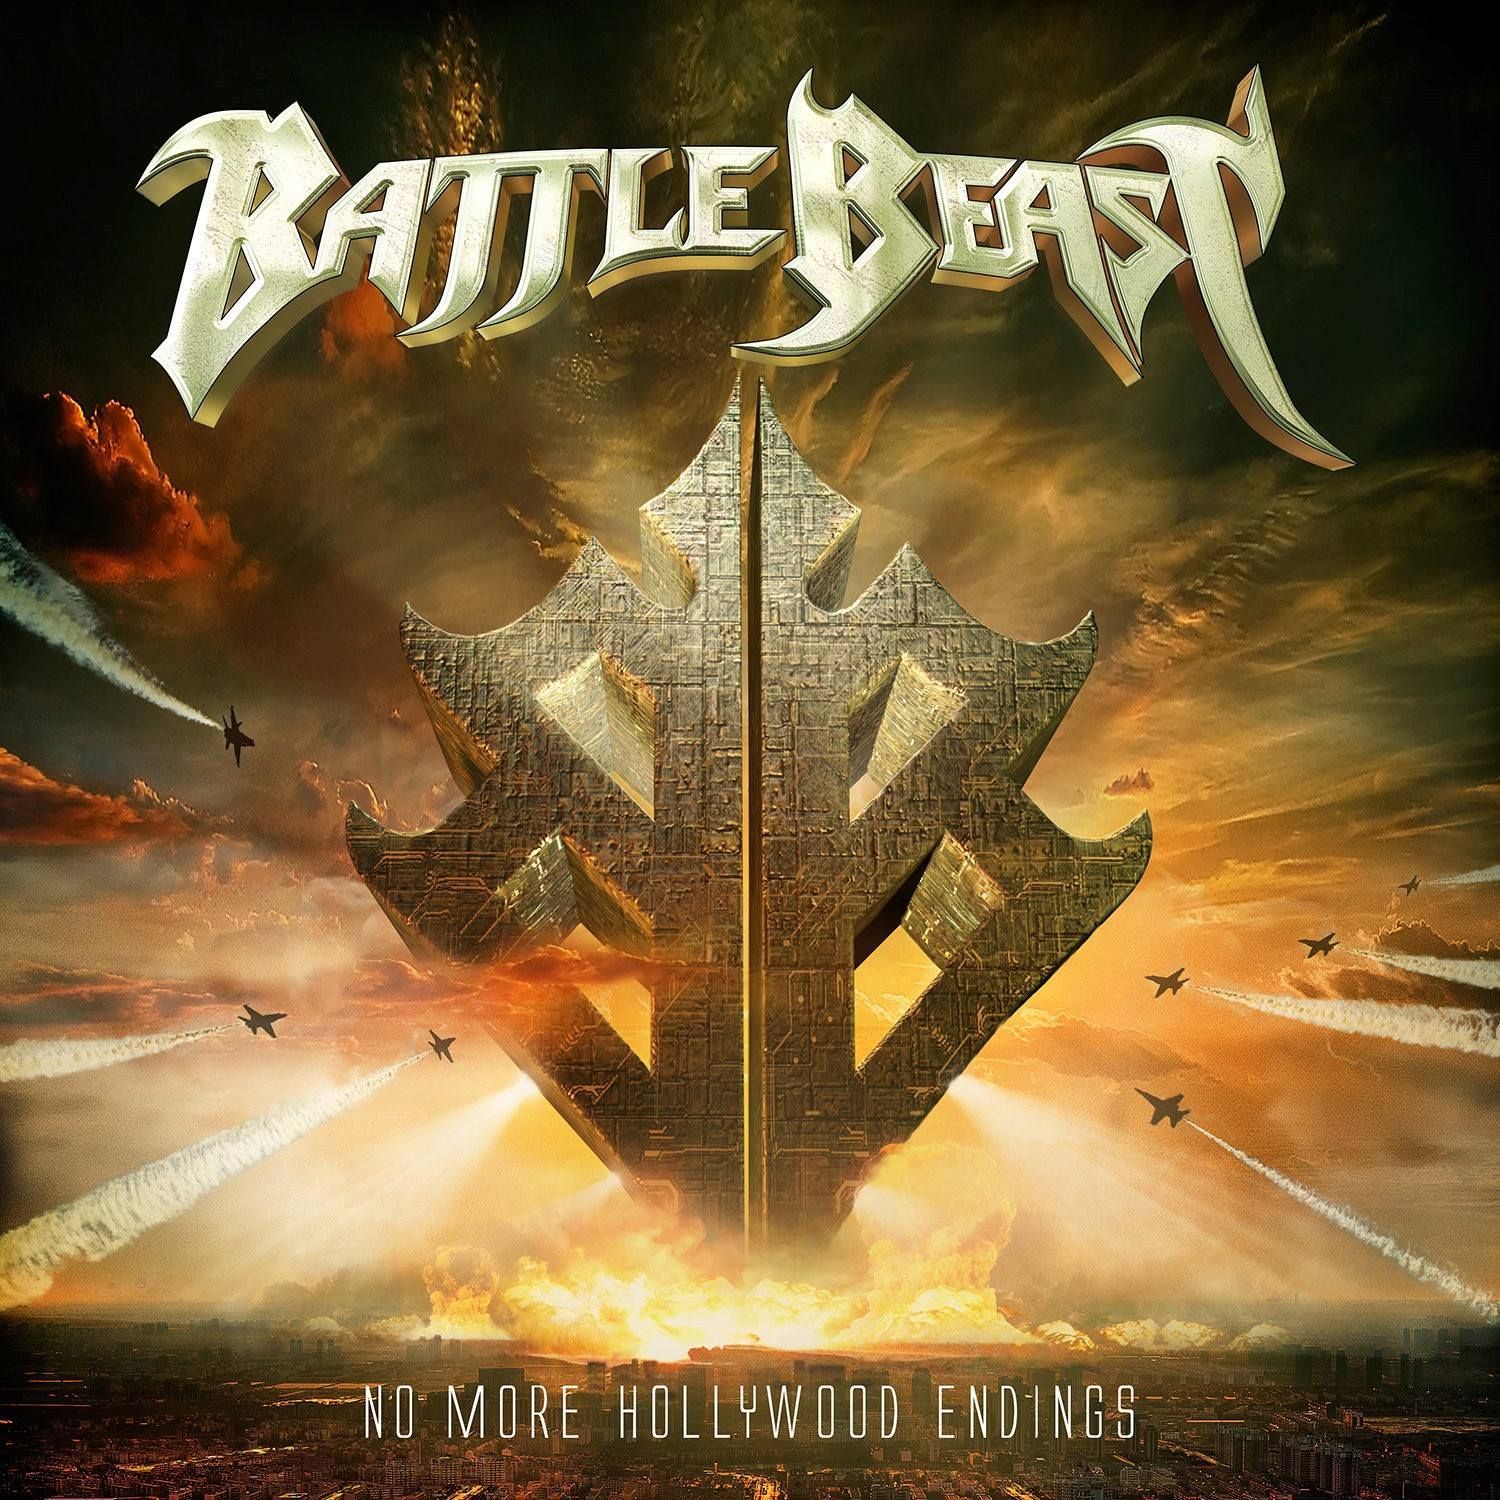 Battle Beast - No More Hollywood Endings (clip)